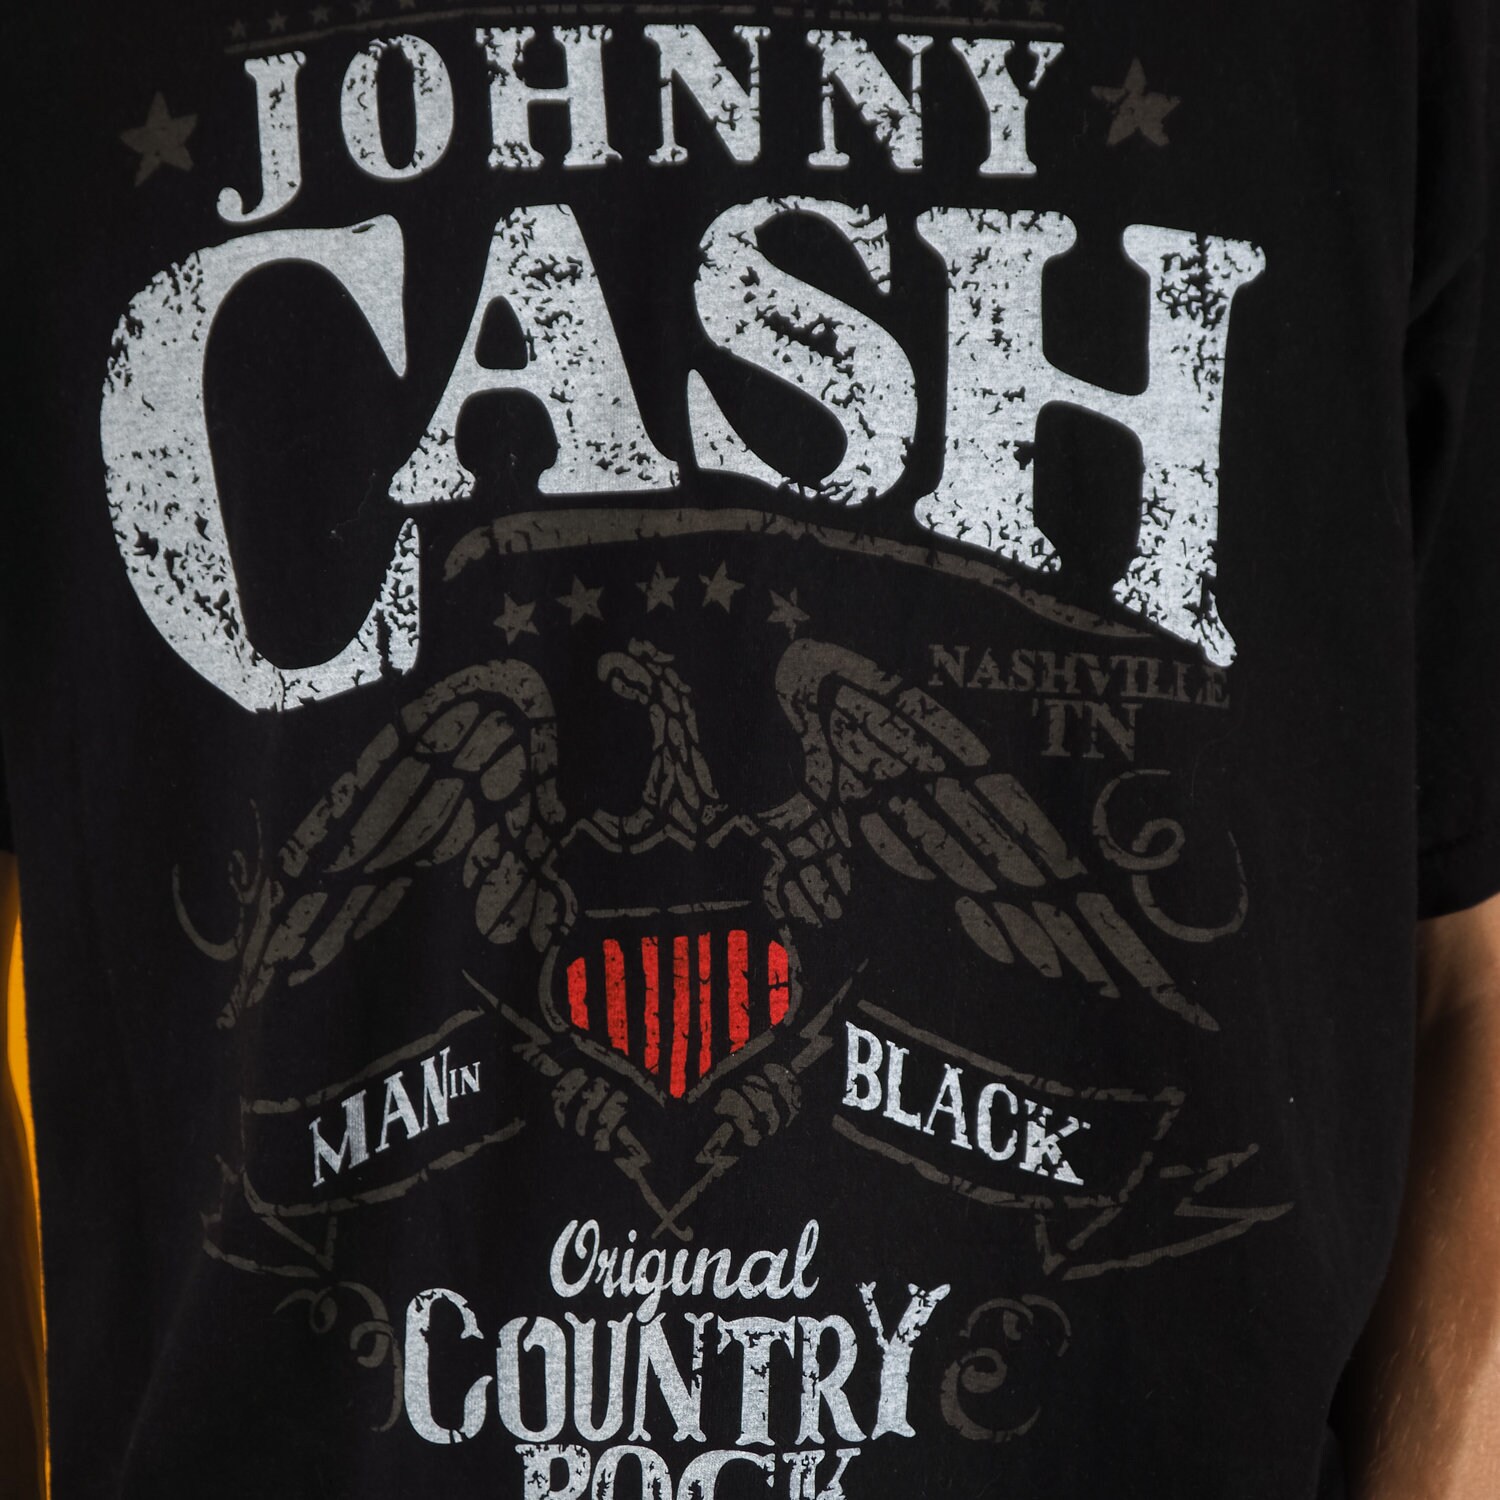 Vintage Johnny Cash Original Country Rock Unisex T-Shirt